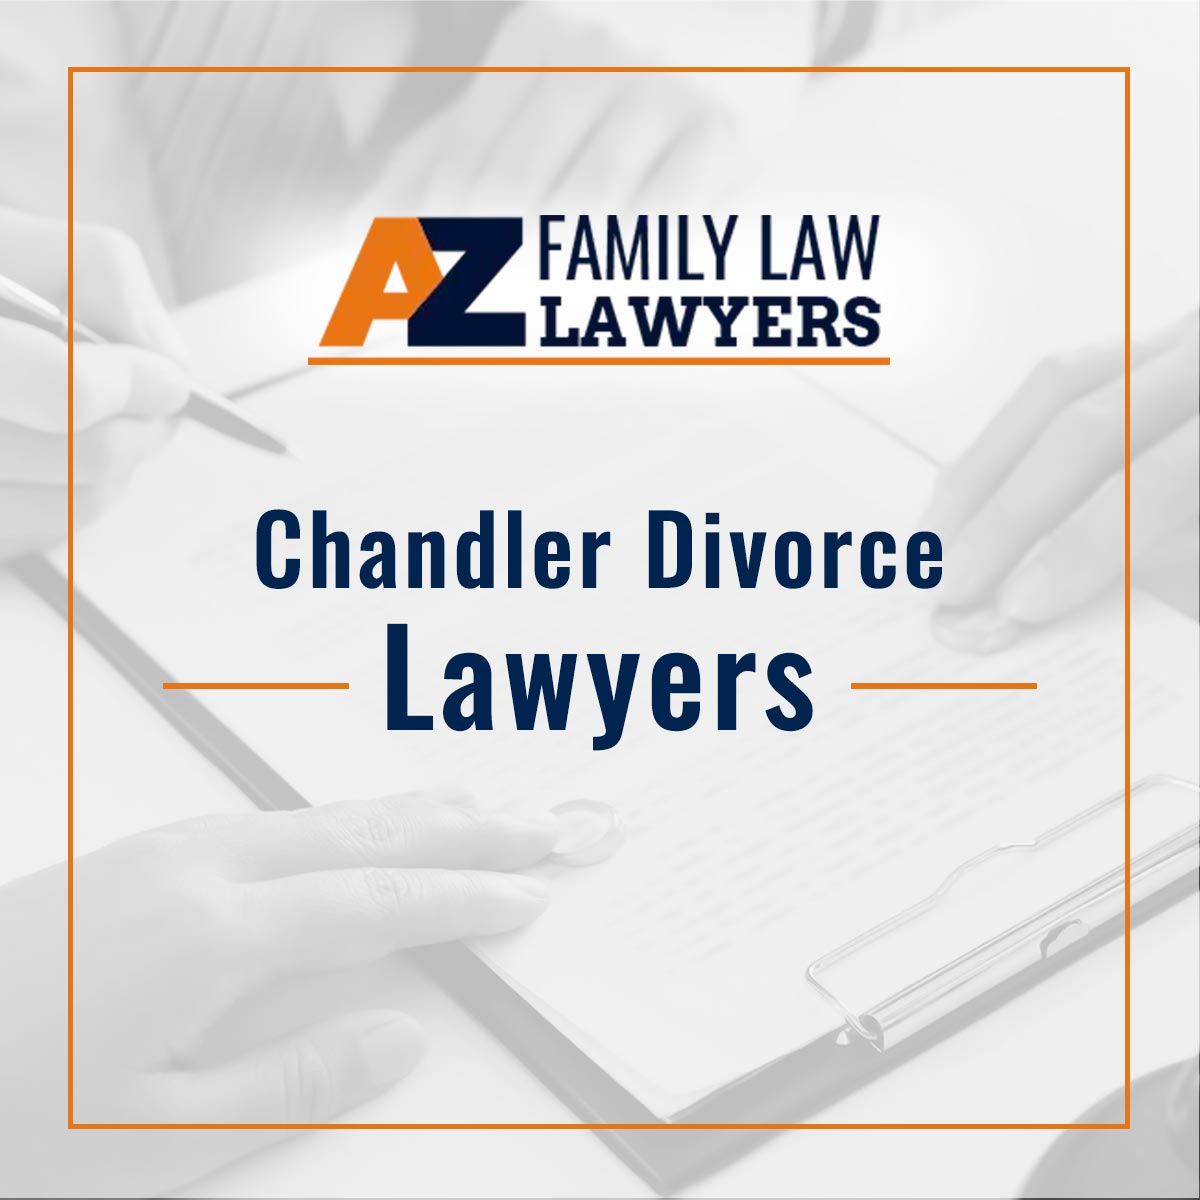 Chandler Divorce Lawyers https://azfamilylawlawyer.com/